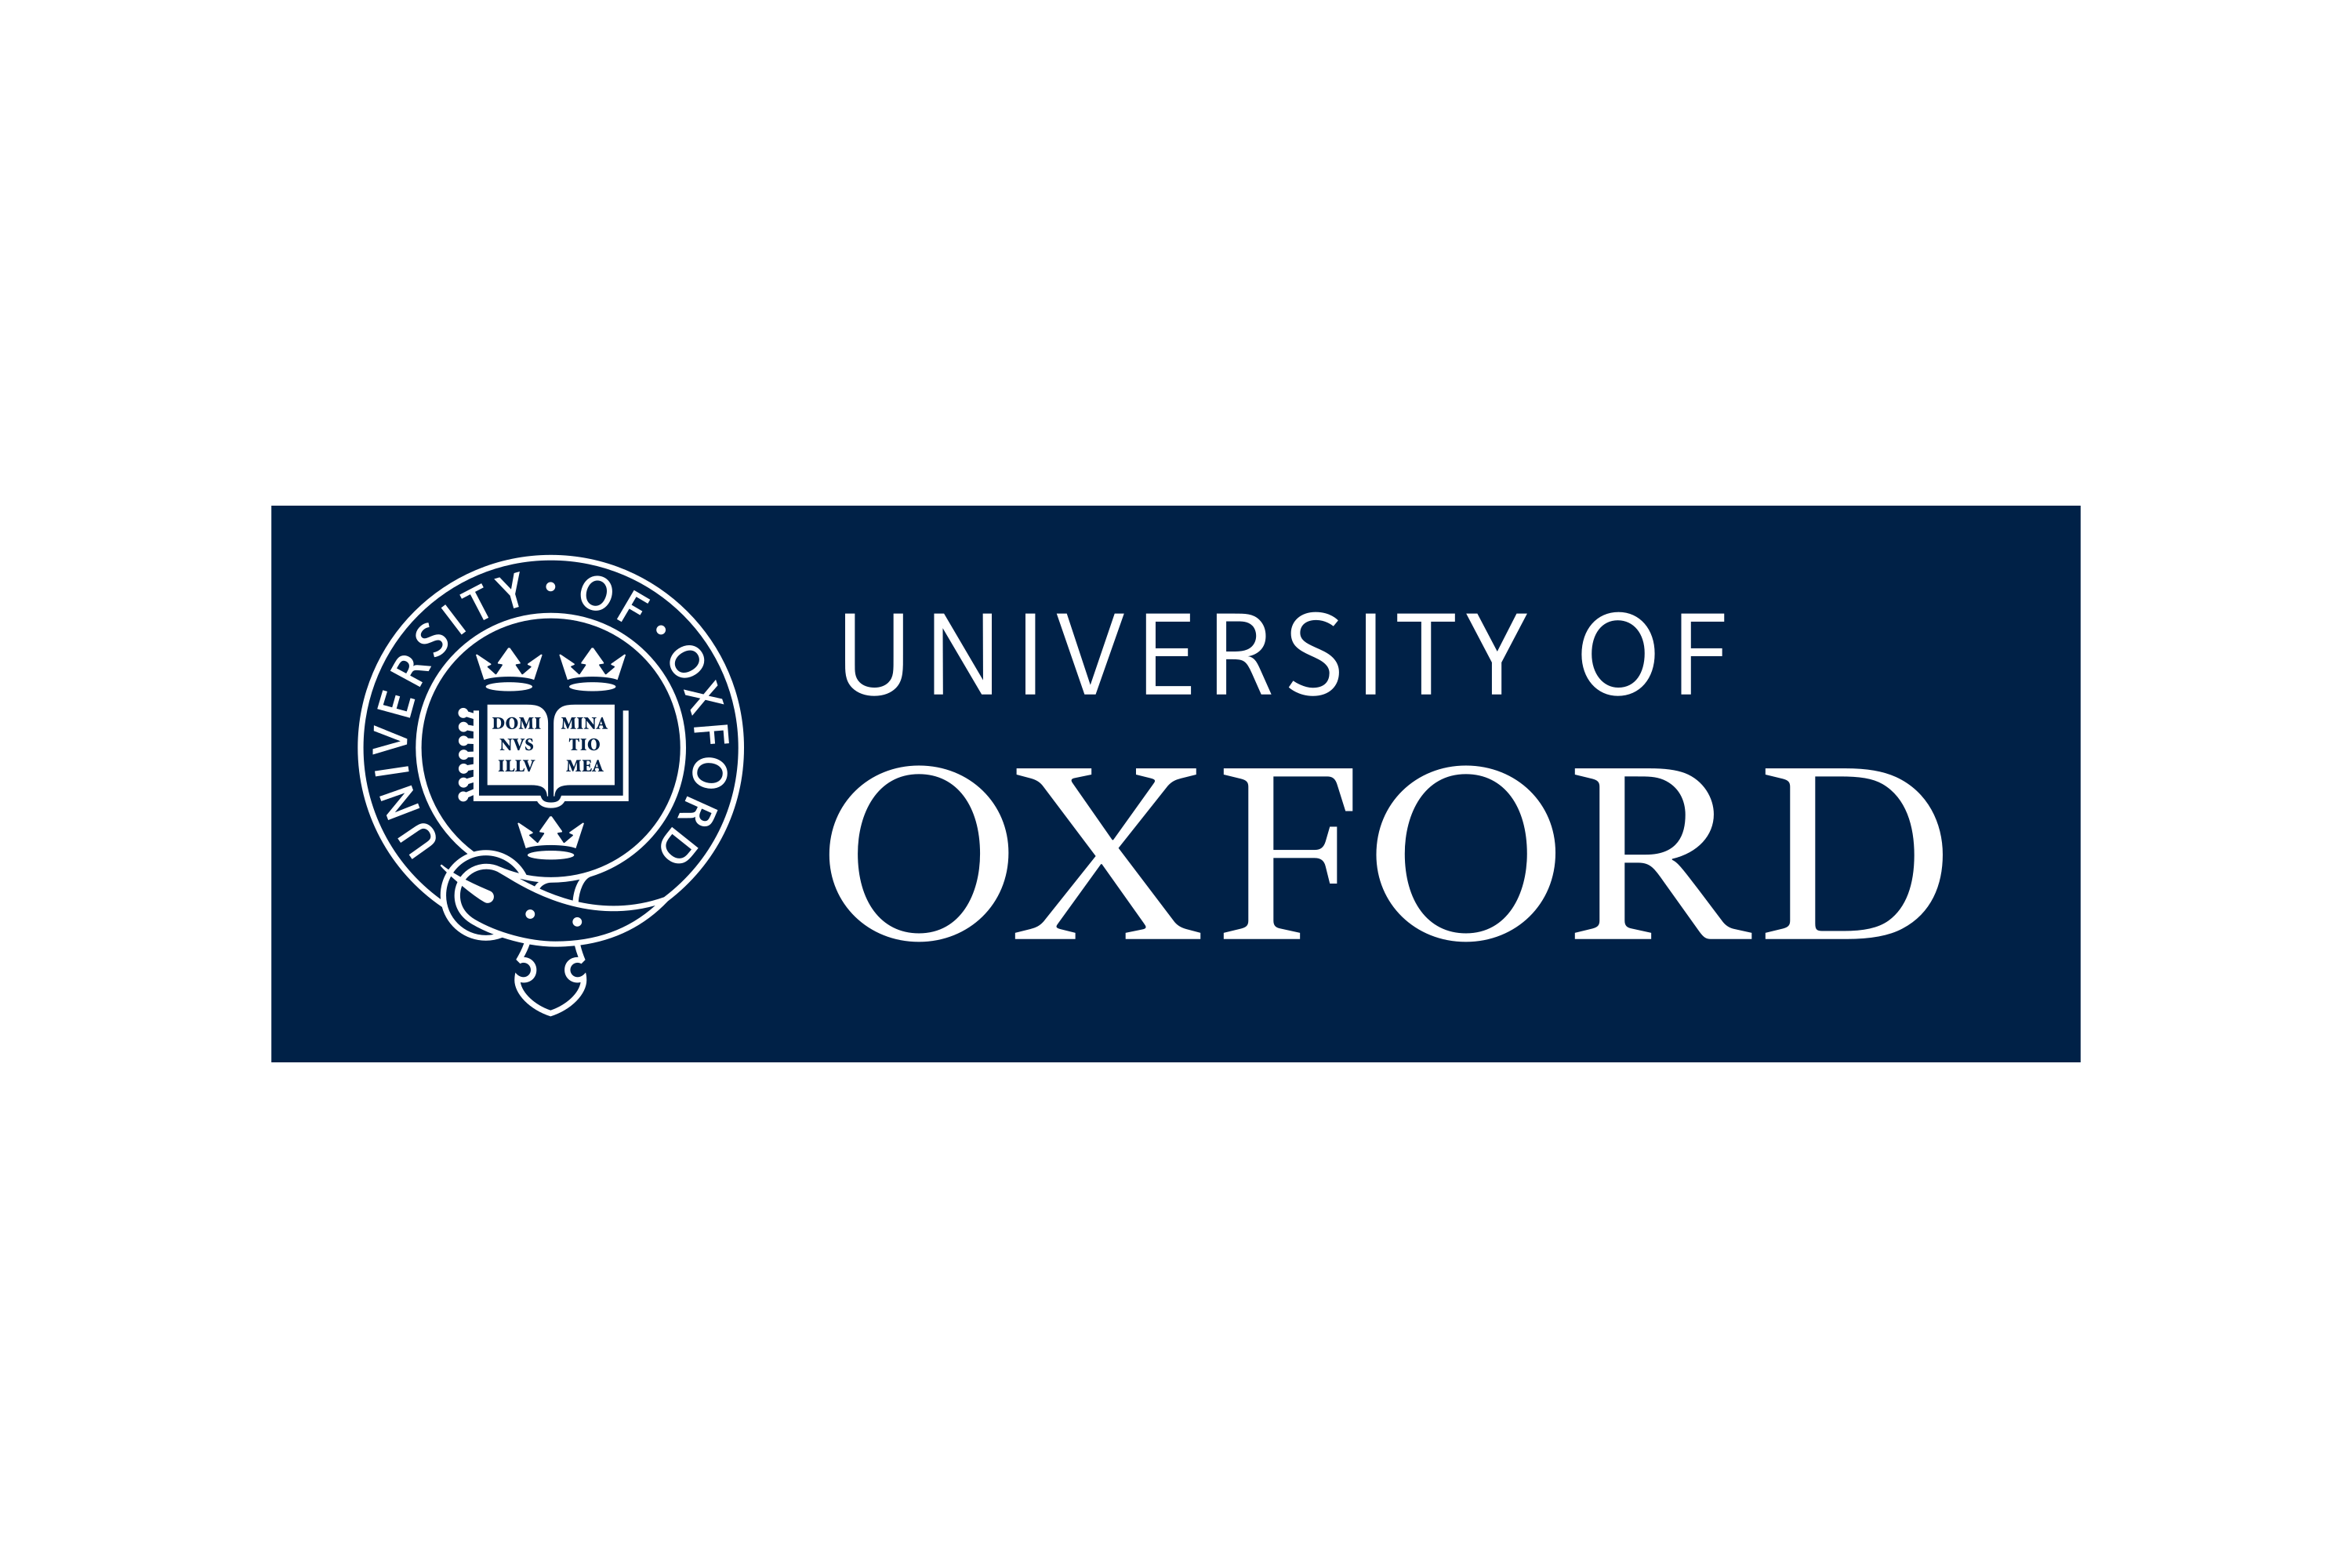 University of Oxford Logo - Free download logo in SVG or PNG format